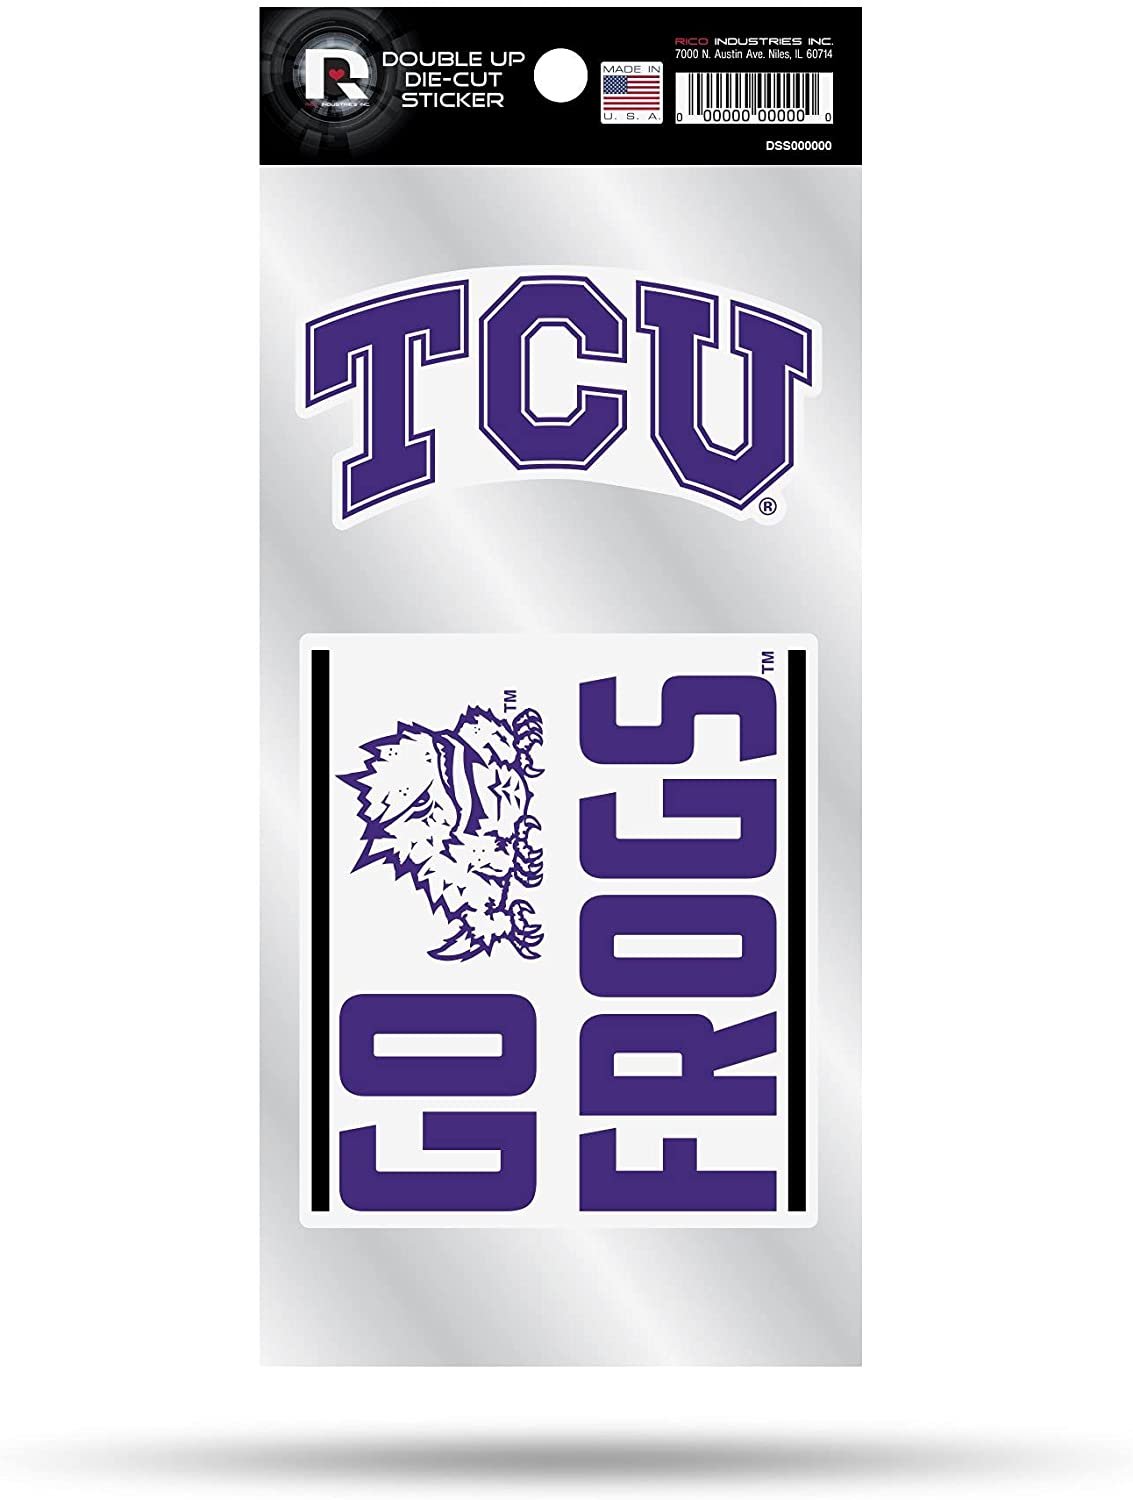 Texas Christian University Horned Frogs TCU 2-Piece Double Up Die Cut Sticker Decal Sheet, 4x8 Inch